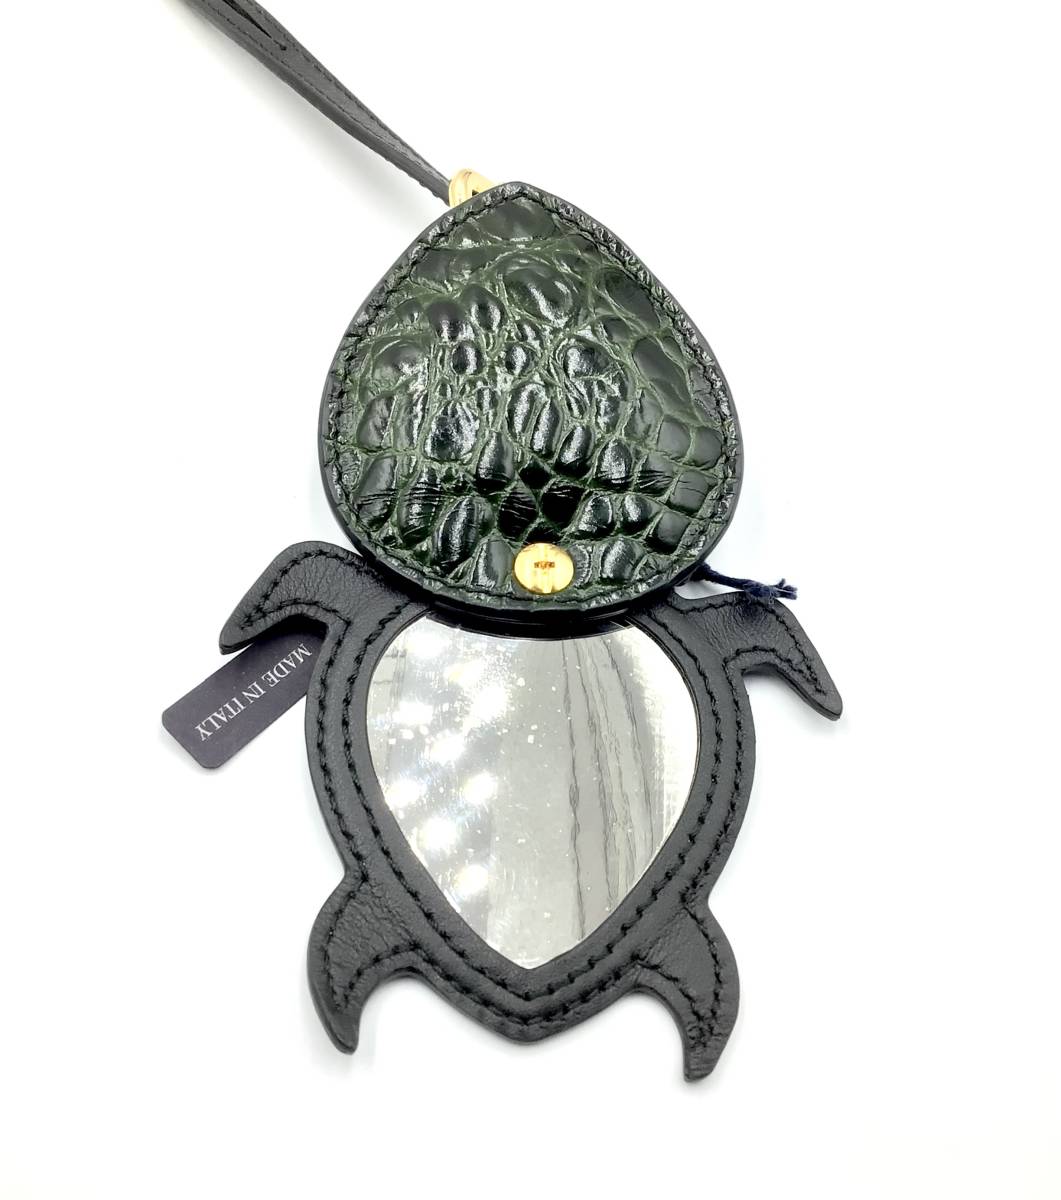 PRADA Prada mirror mirror ta-toru turtle leather black ko green green black black Gold metal fittings bag charm key holder 